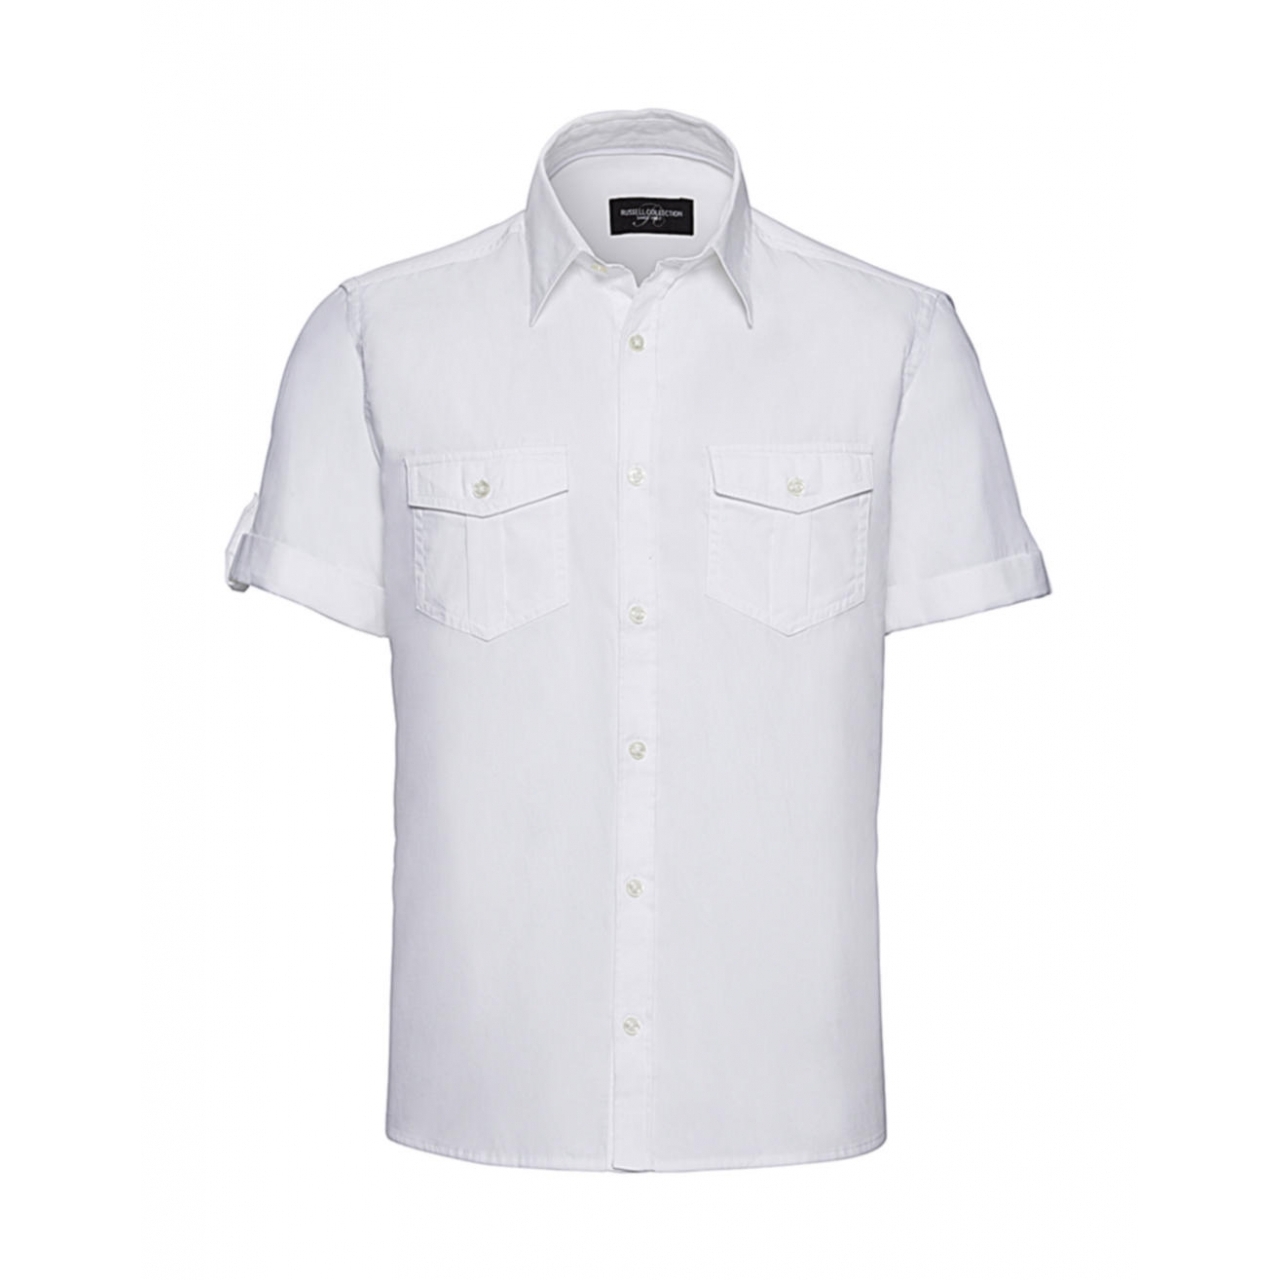 Košile pánská krátký rukáv Rusell Roll Sleeve - bílá, XL